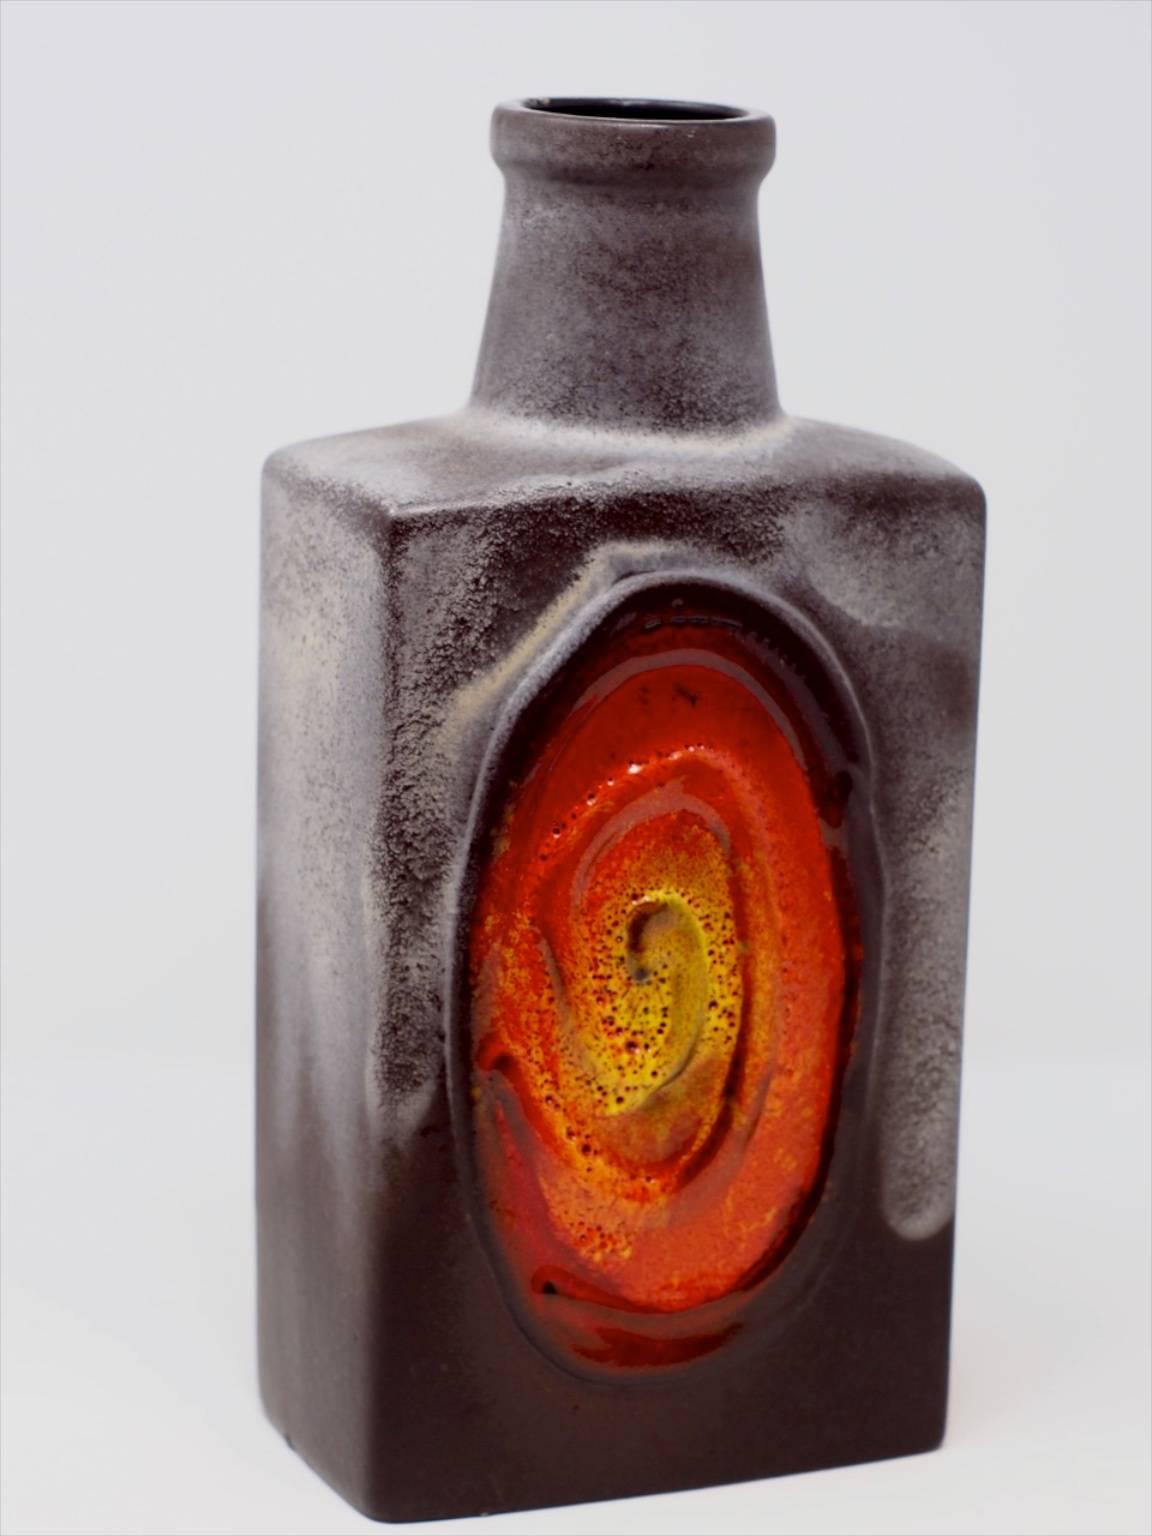 German ceramic vase with colored swirl design.